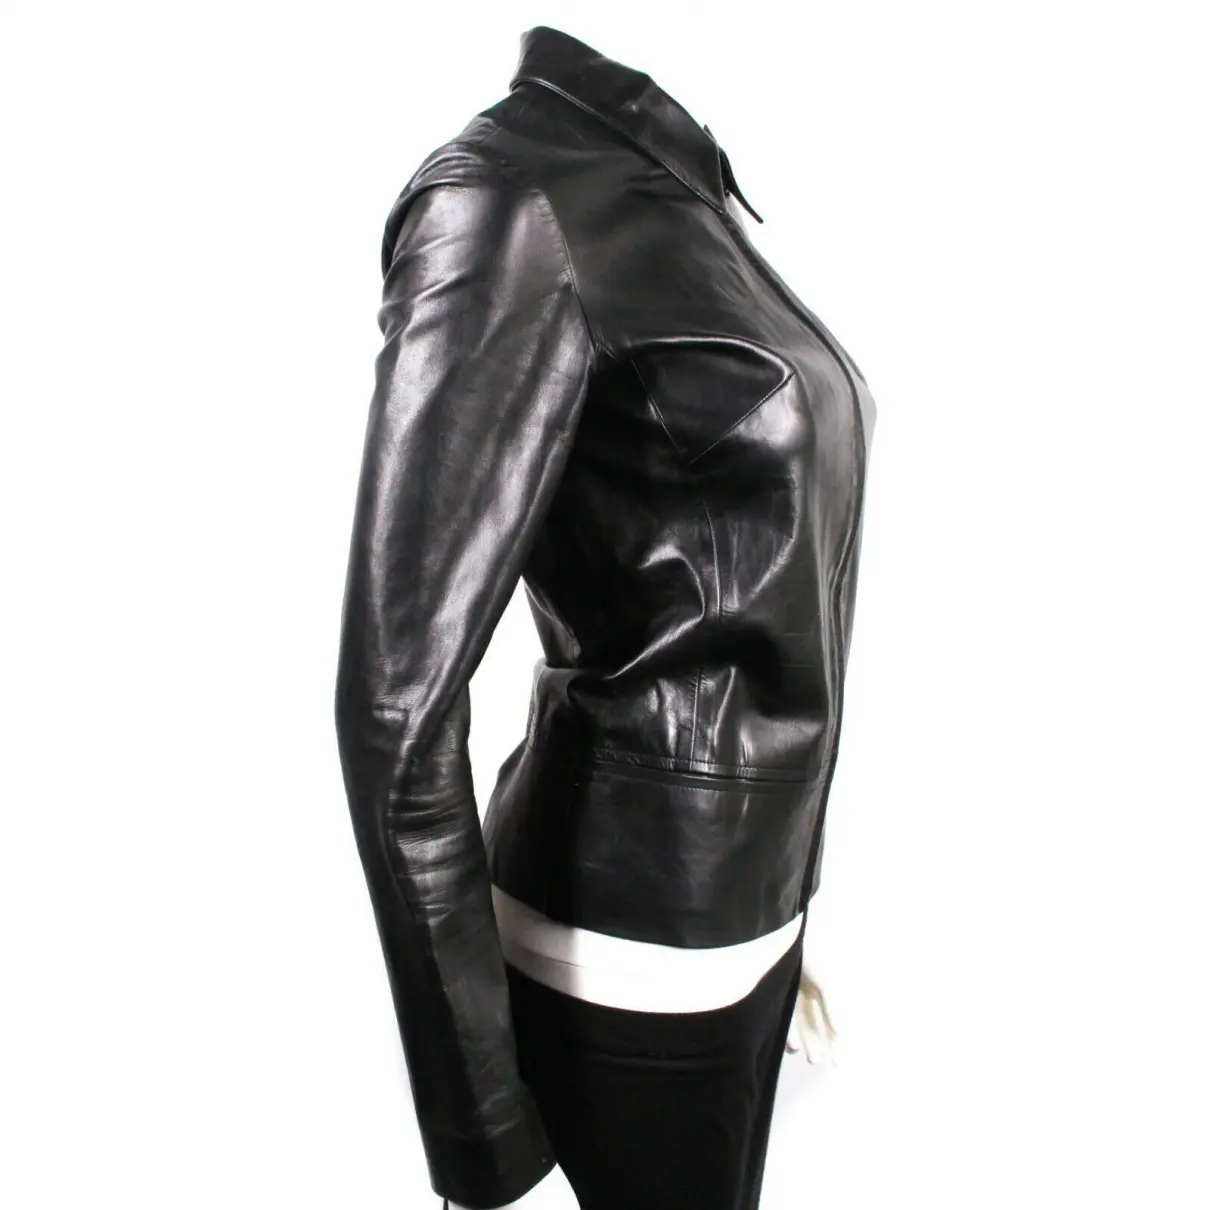 Buy Plein Sud Leather jacket online